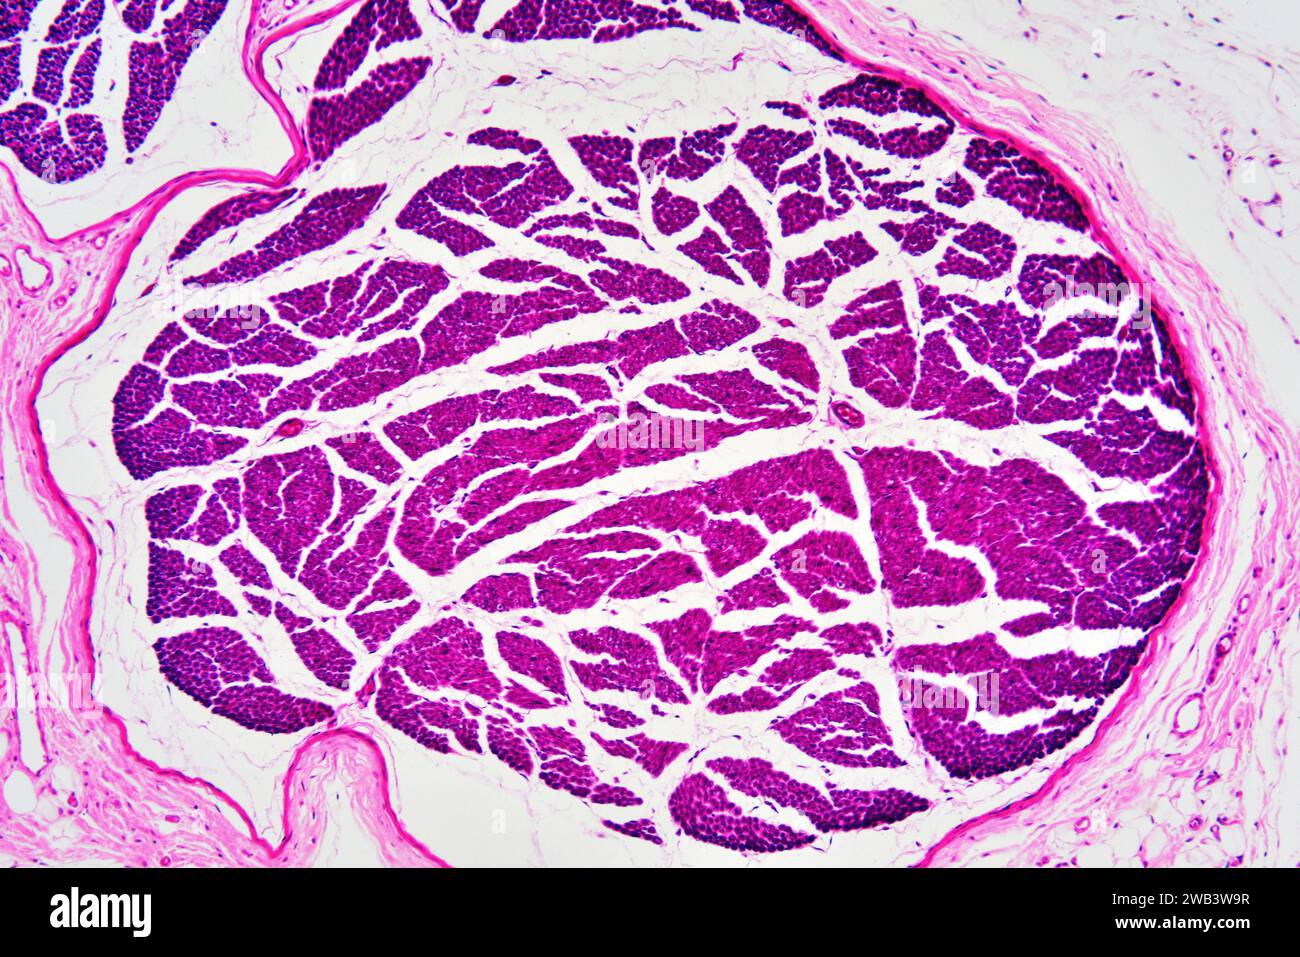 Fibre nervose umane con perineurio. X75 a 10 cm di larghezza. Foto Stock